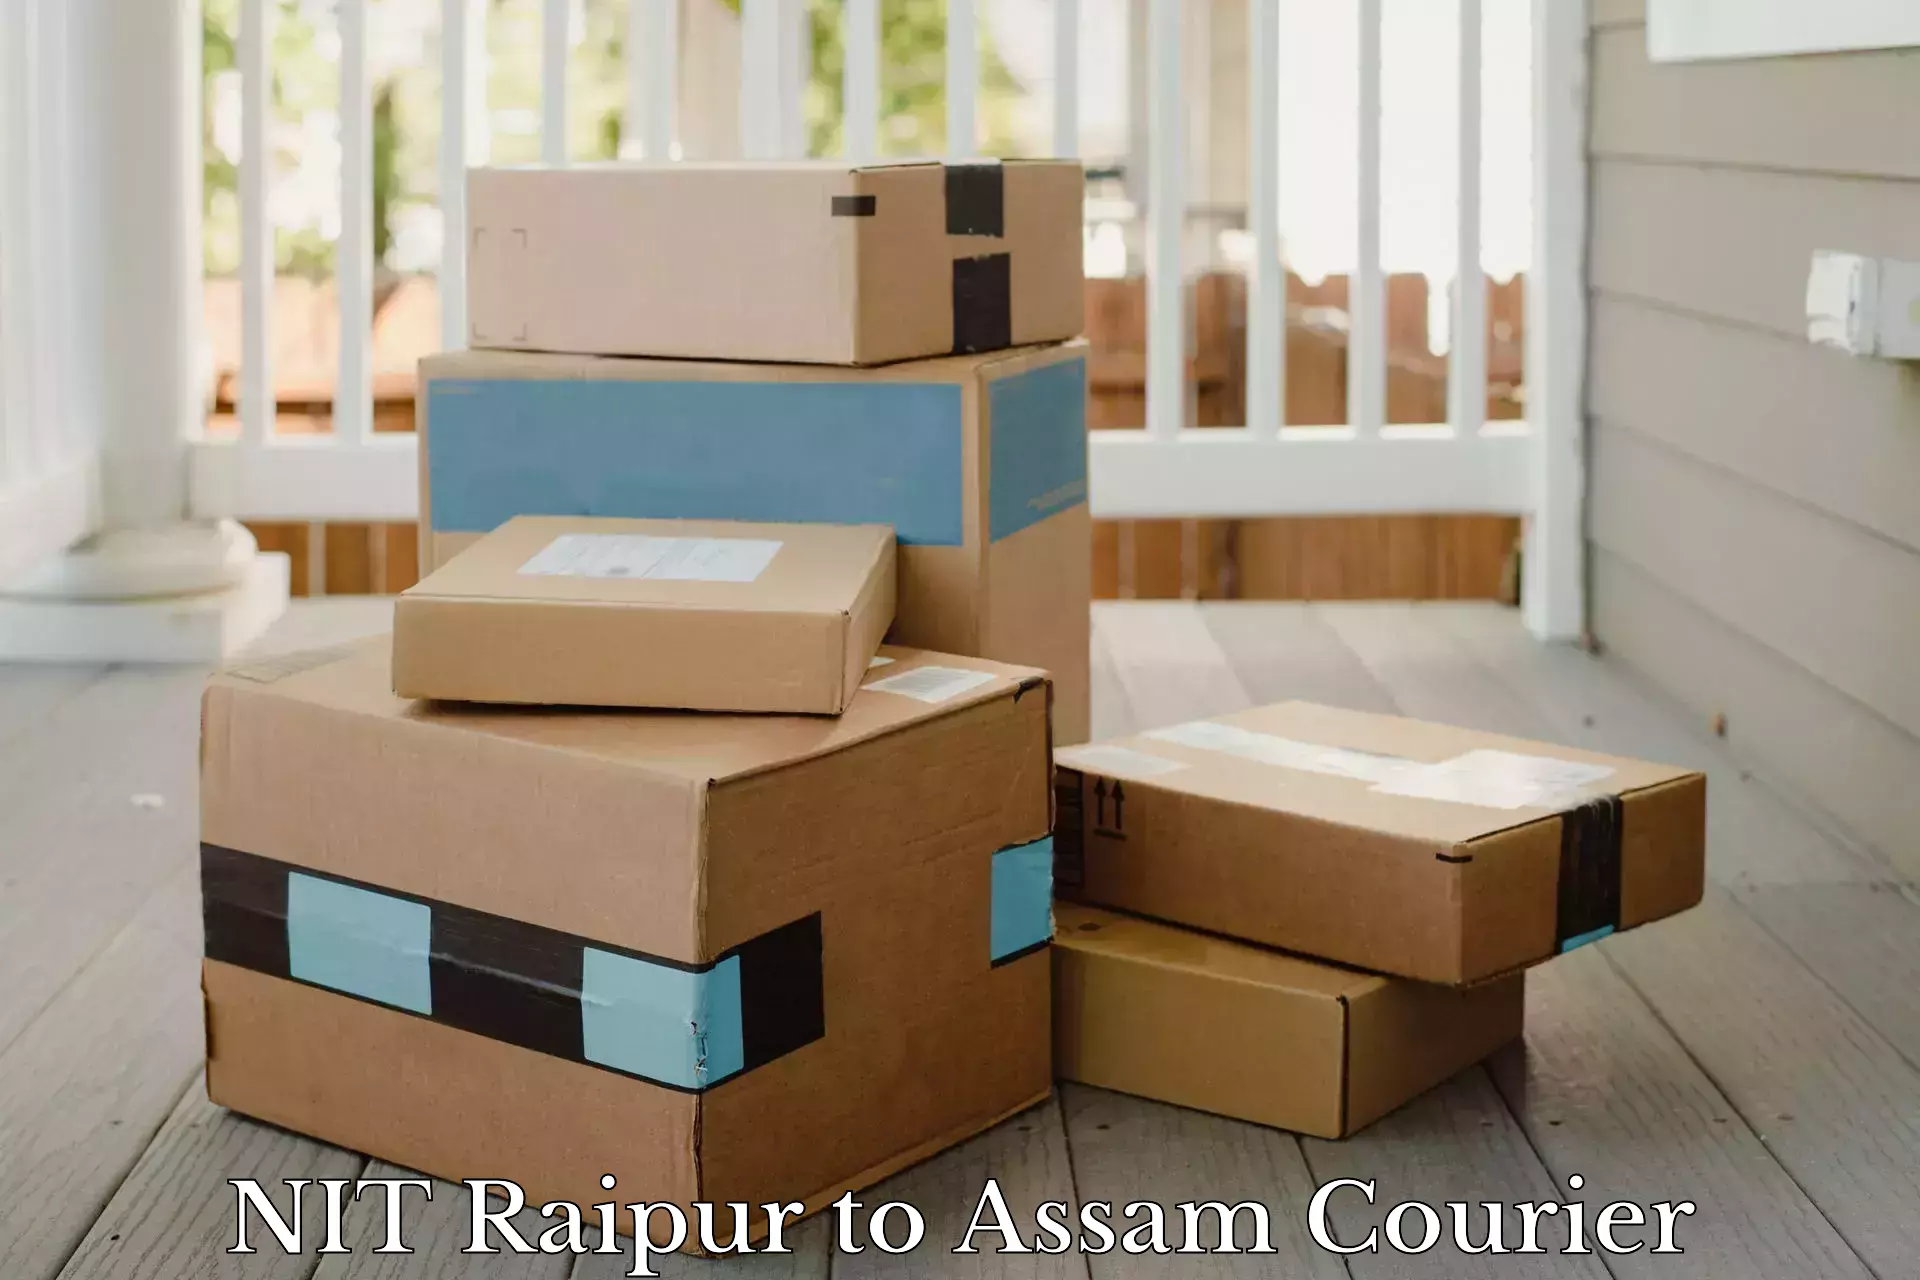 Courier service partnerships NIT Raipur to Chabua